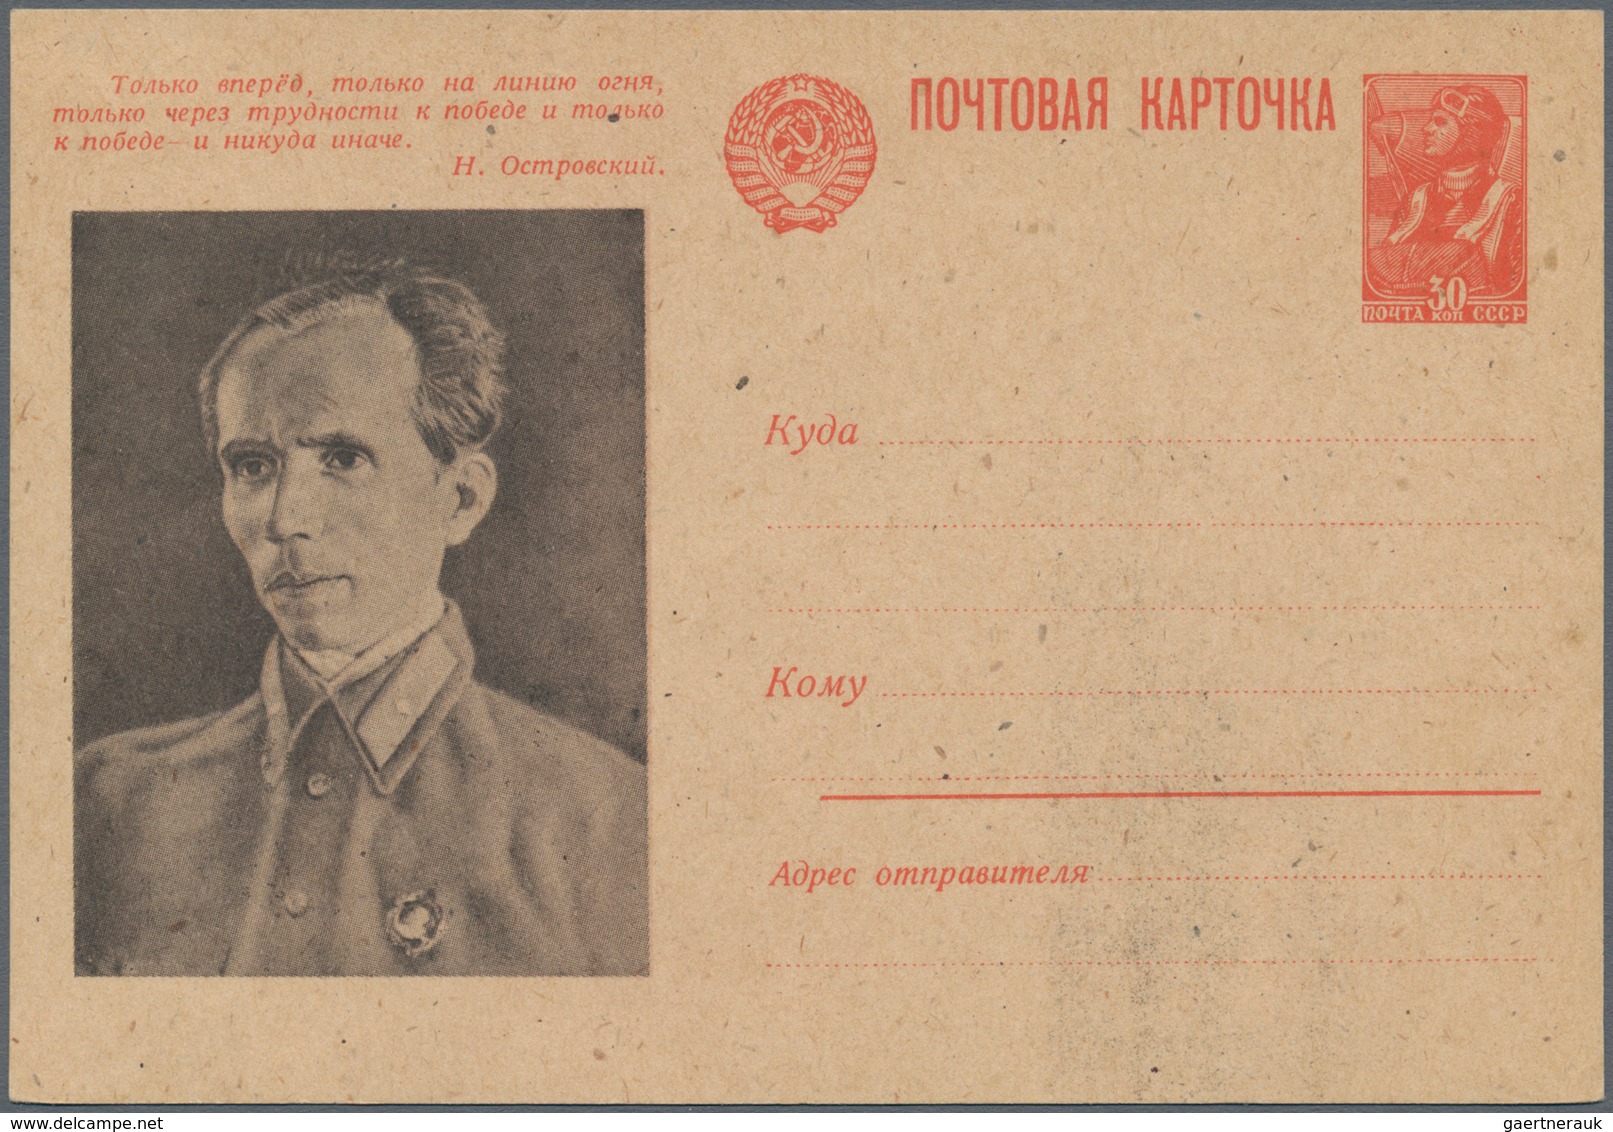 Sowjetunion - Ganzsachen: 1945/7, 9 picture postcards of the 6th regular issue propaganda Stalin vie